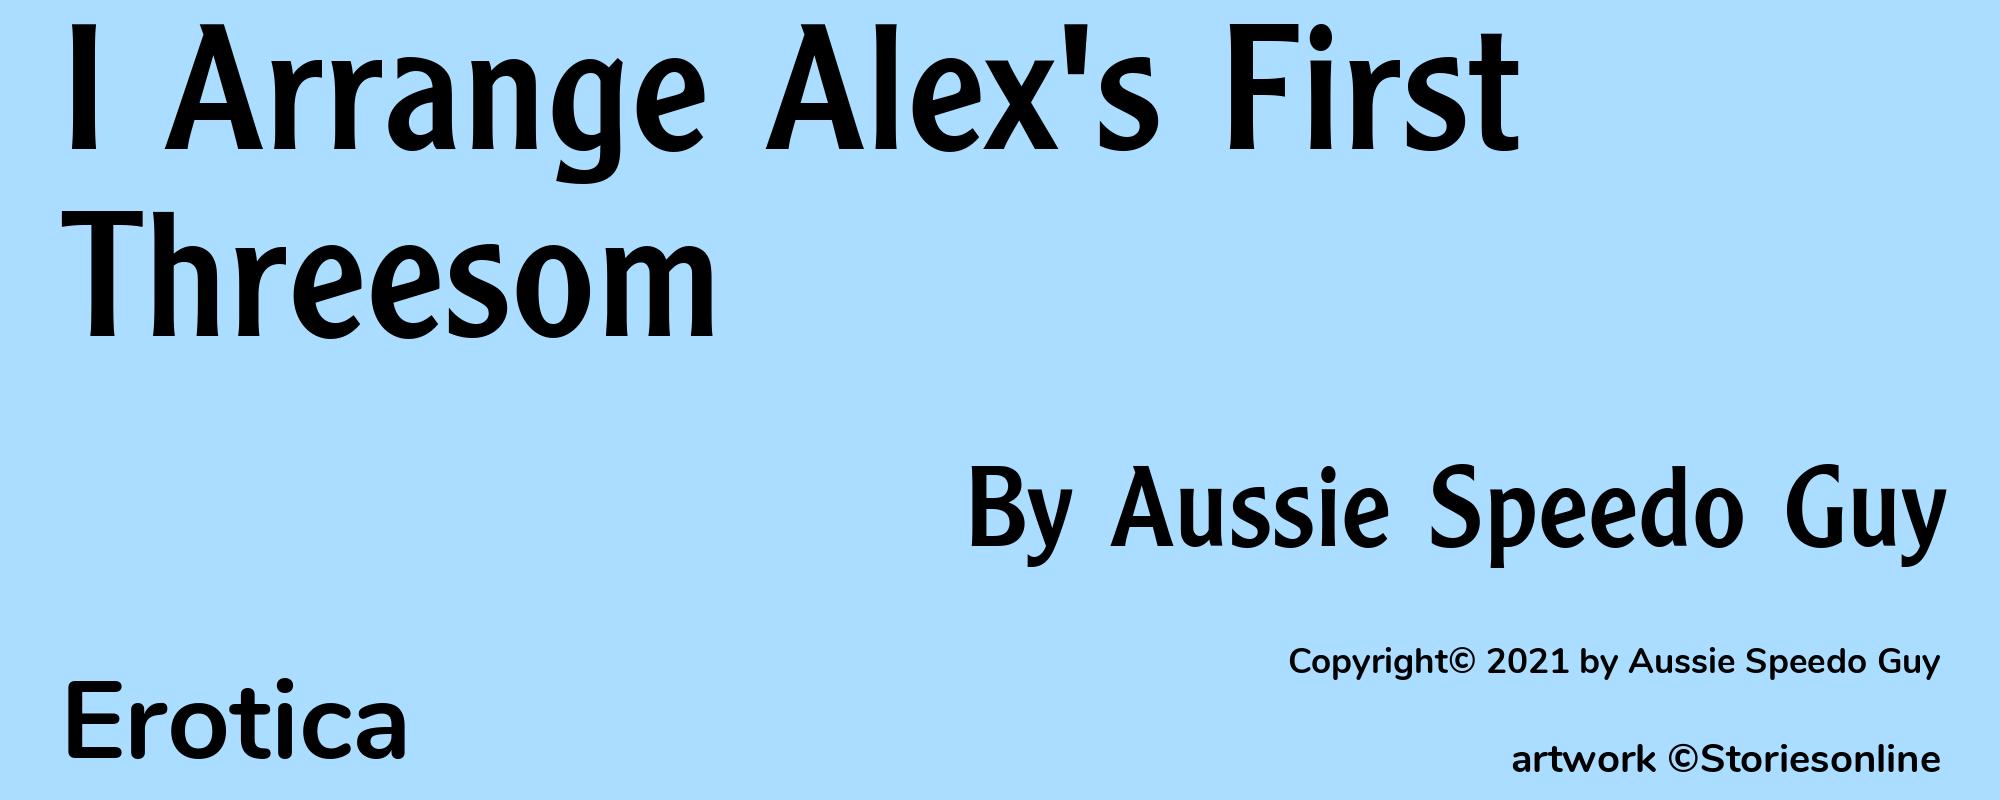 I Arrange Alex's First Threesom - Cover